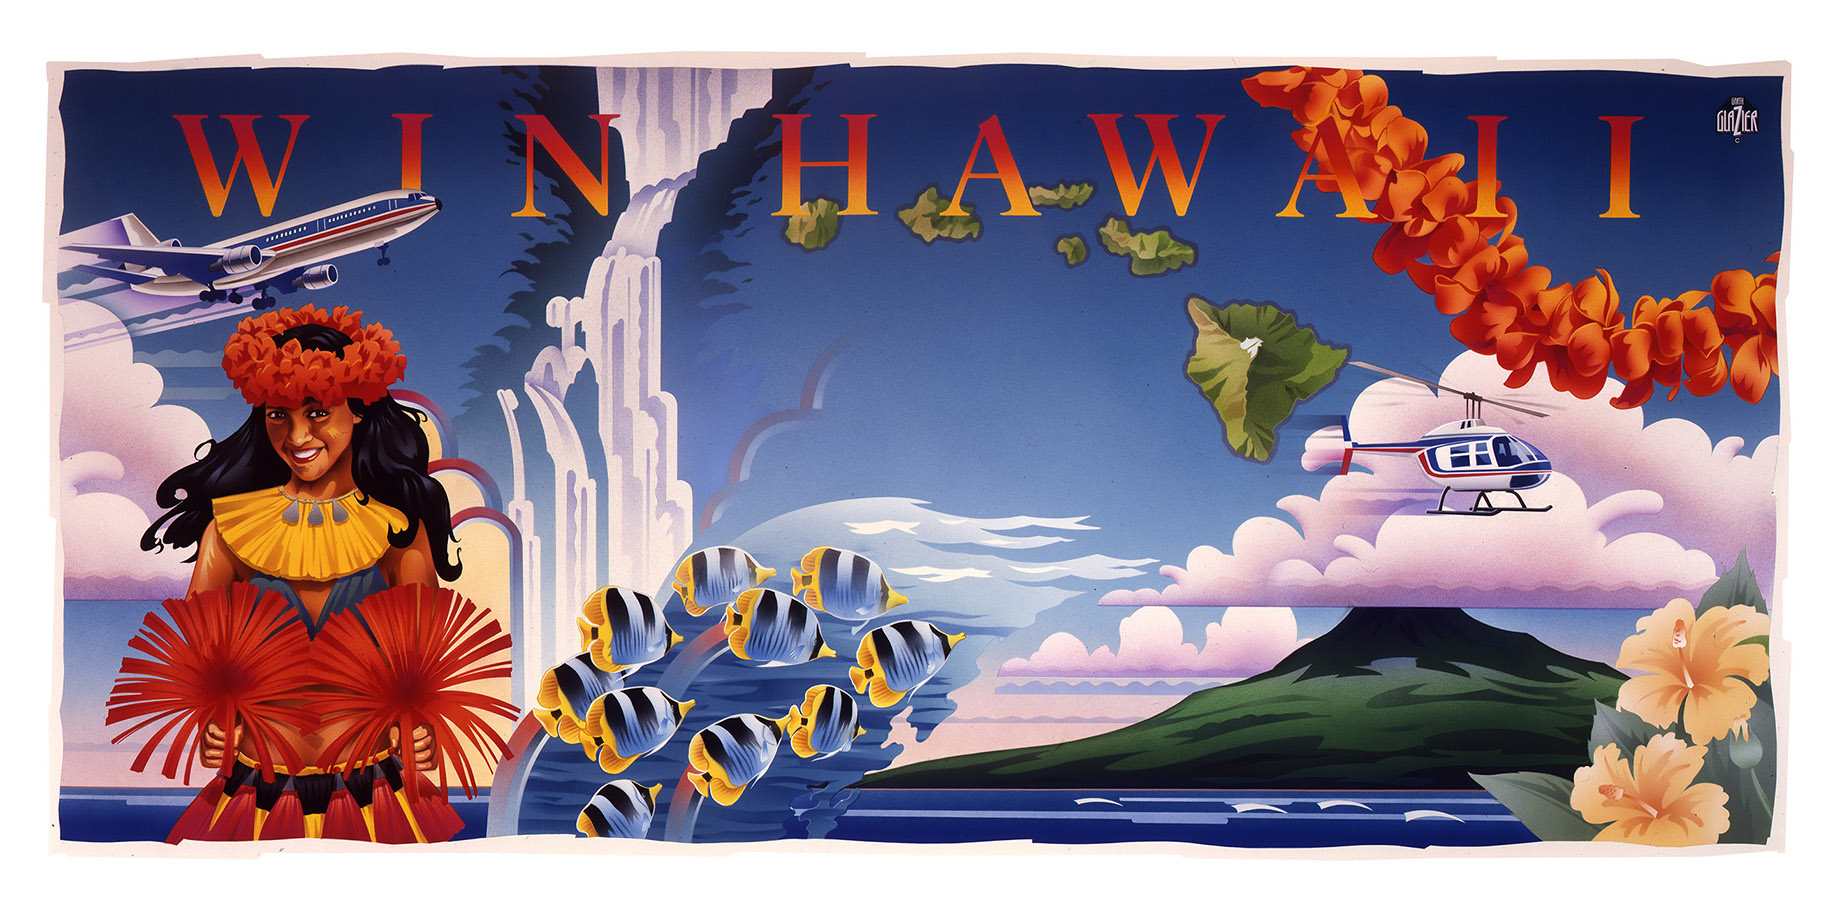 Travel_HawaiiVacation